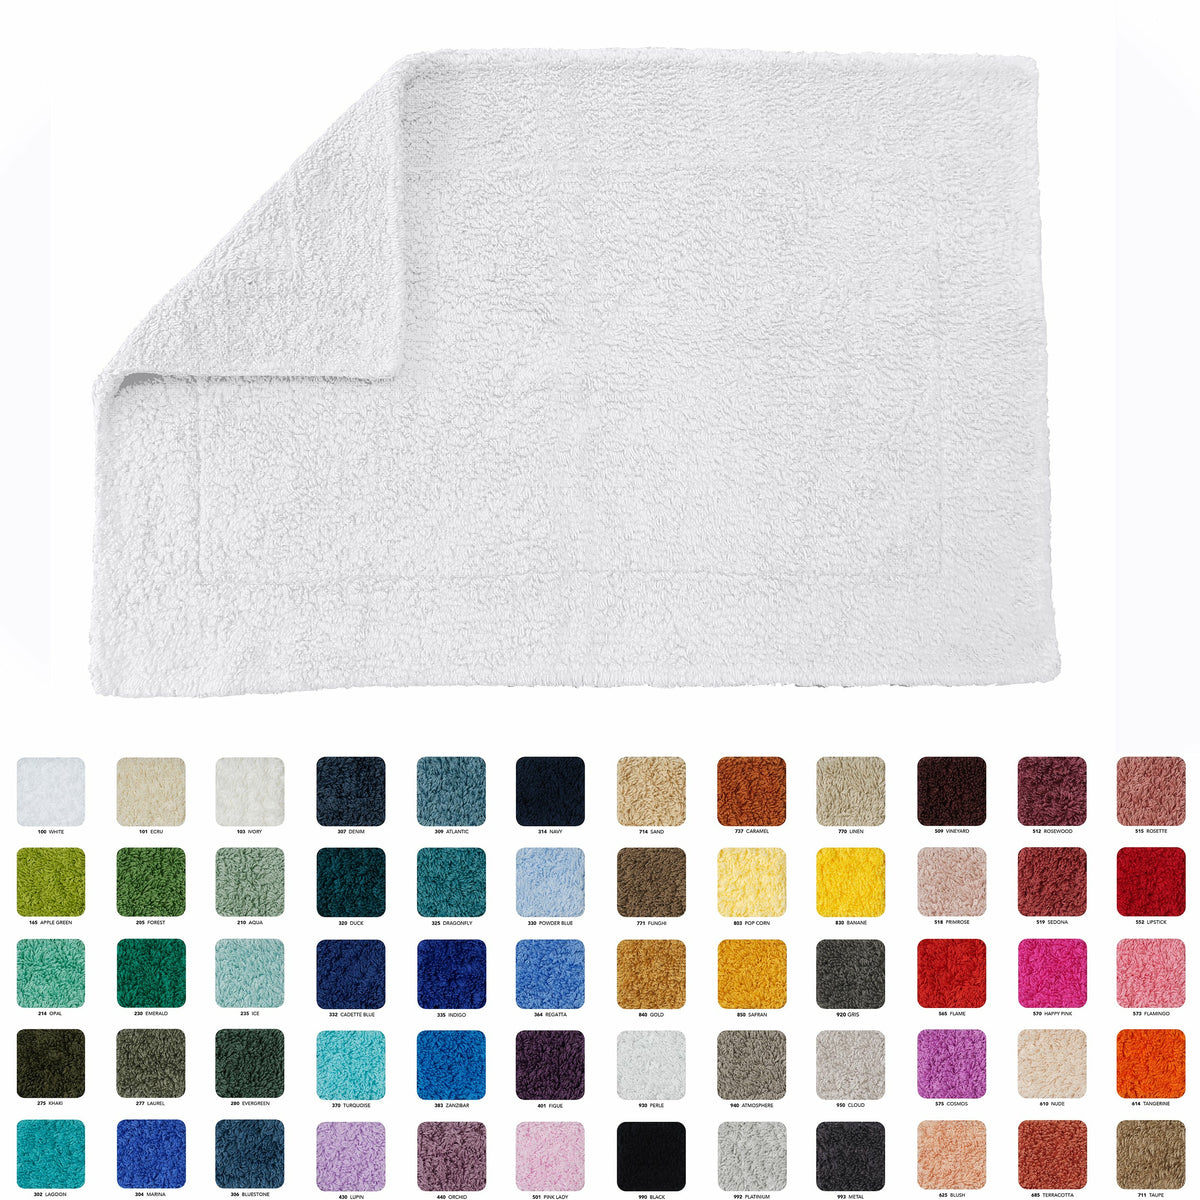 Abyss Super Pile Towels - Hand Towel 17x30 Ecru 101